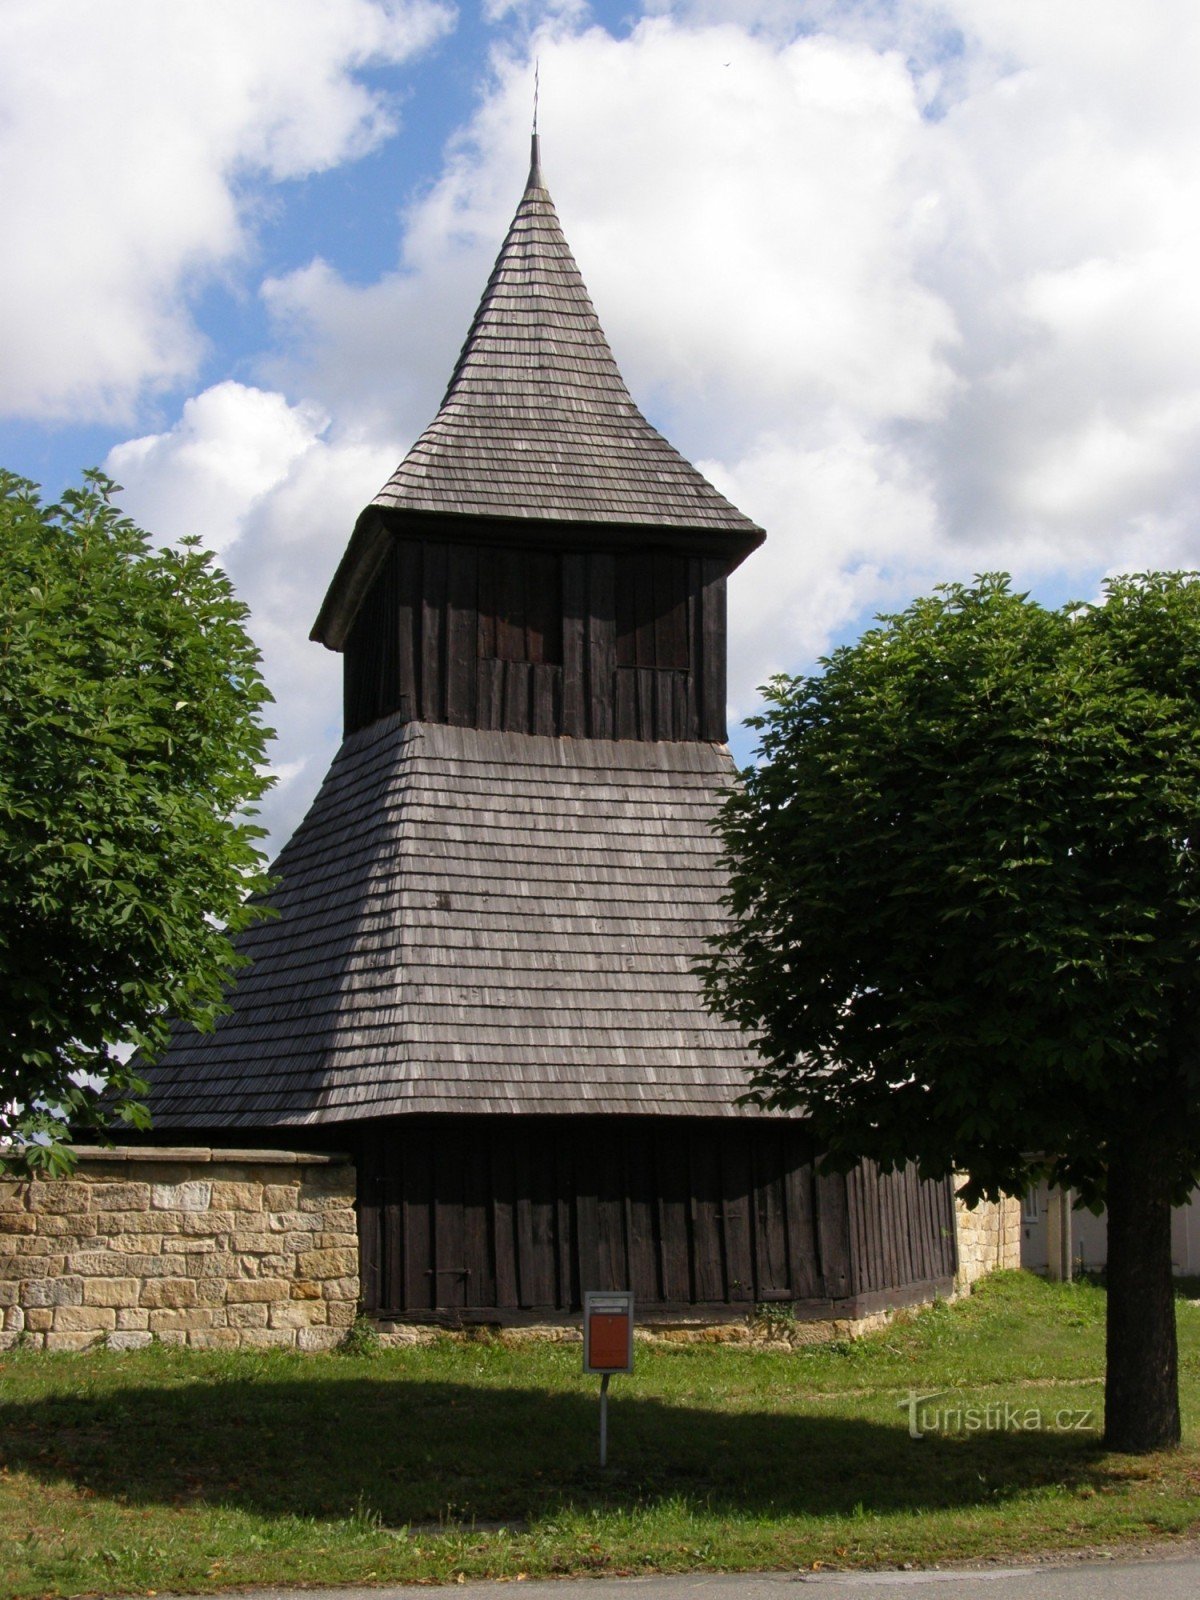 Vysočany - Holzkirche St. Märkte mit einem hölzernen Glockenturm